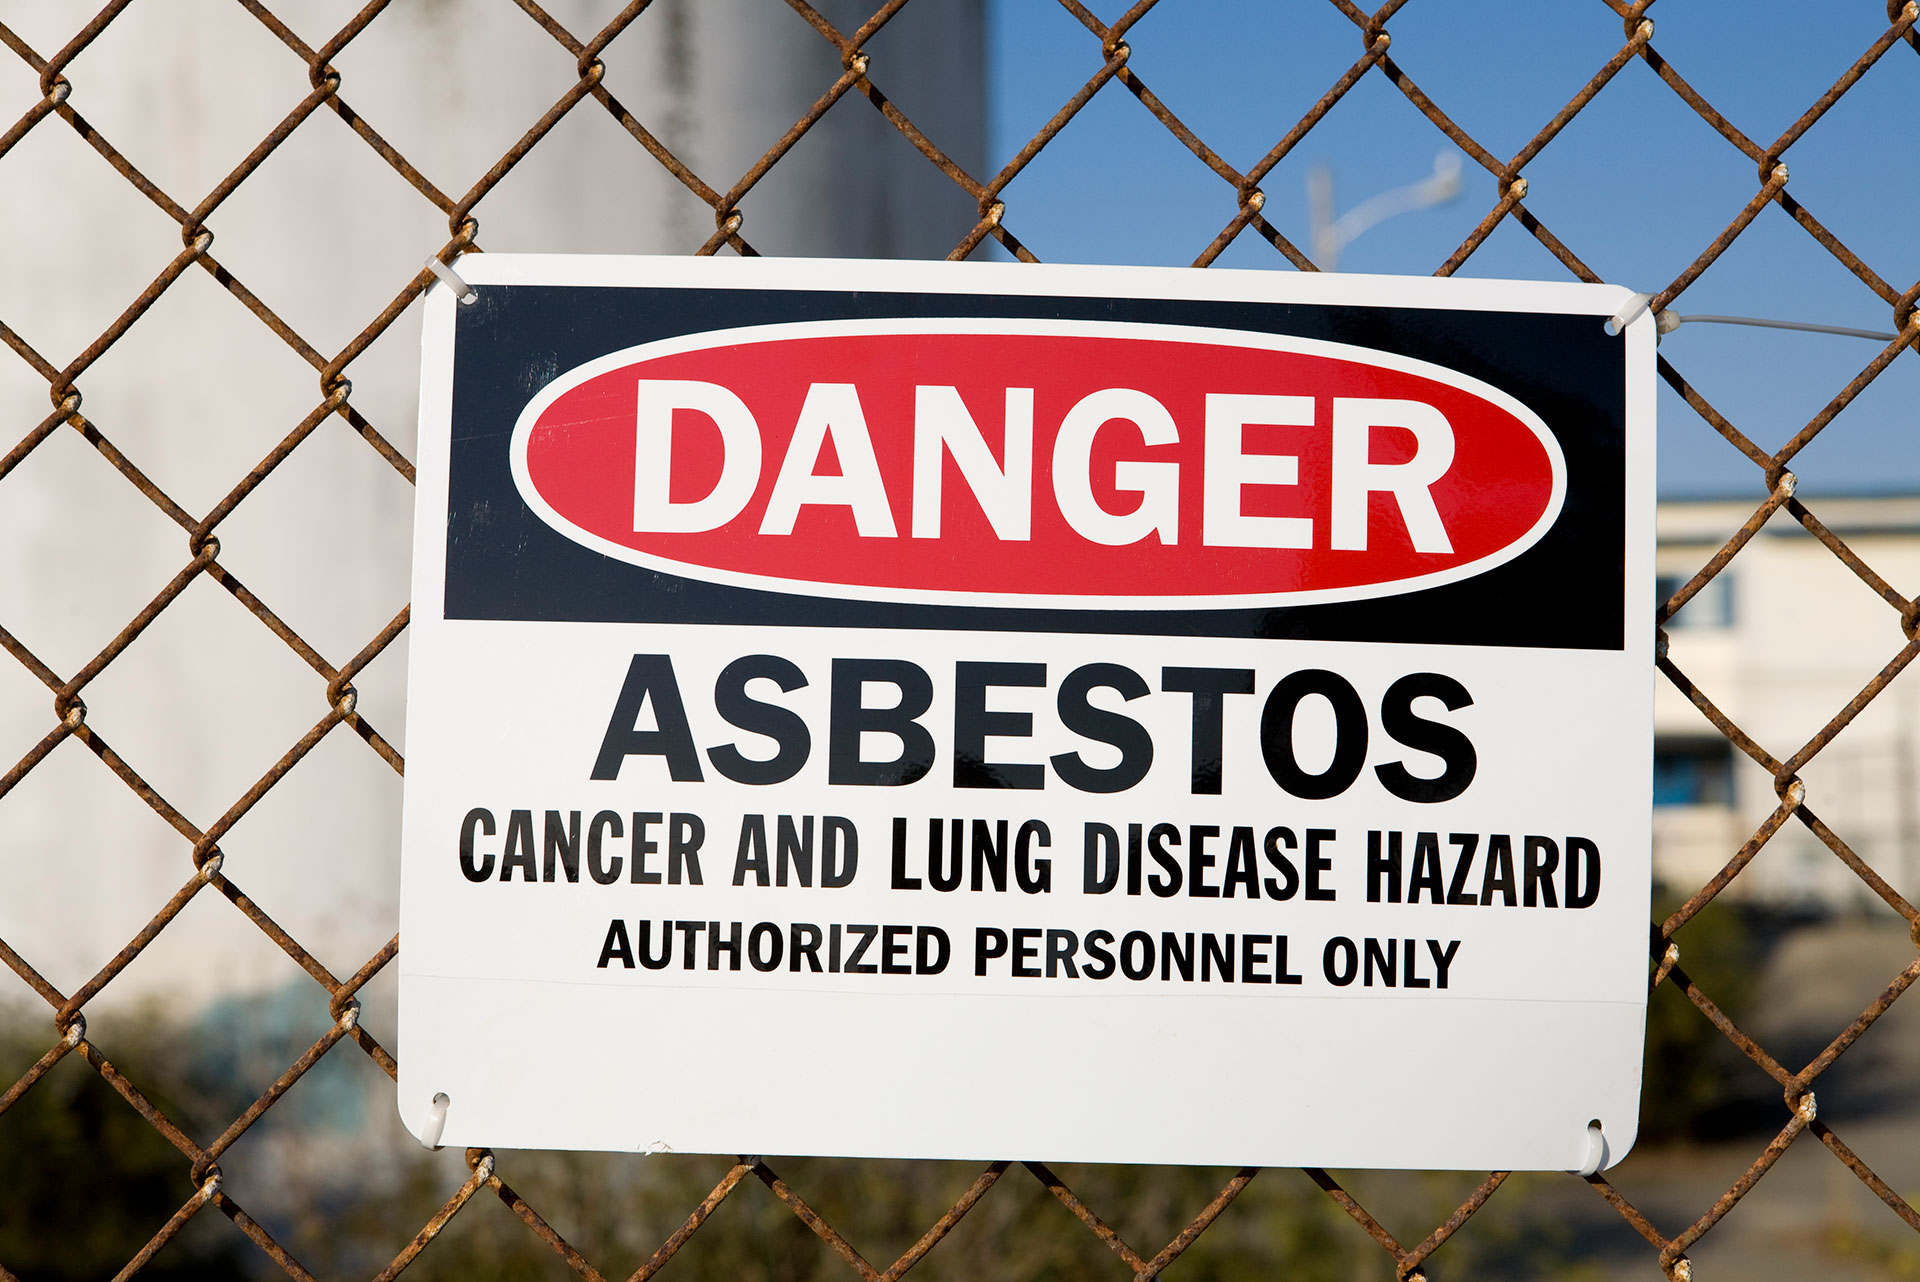 Danger - Asbestos sign